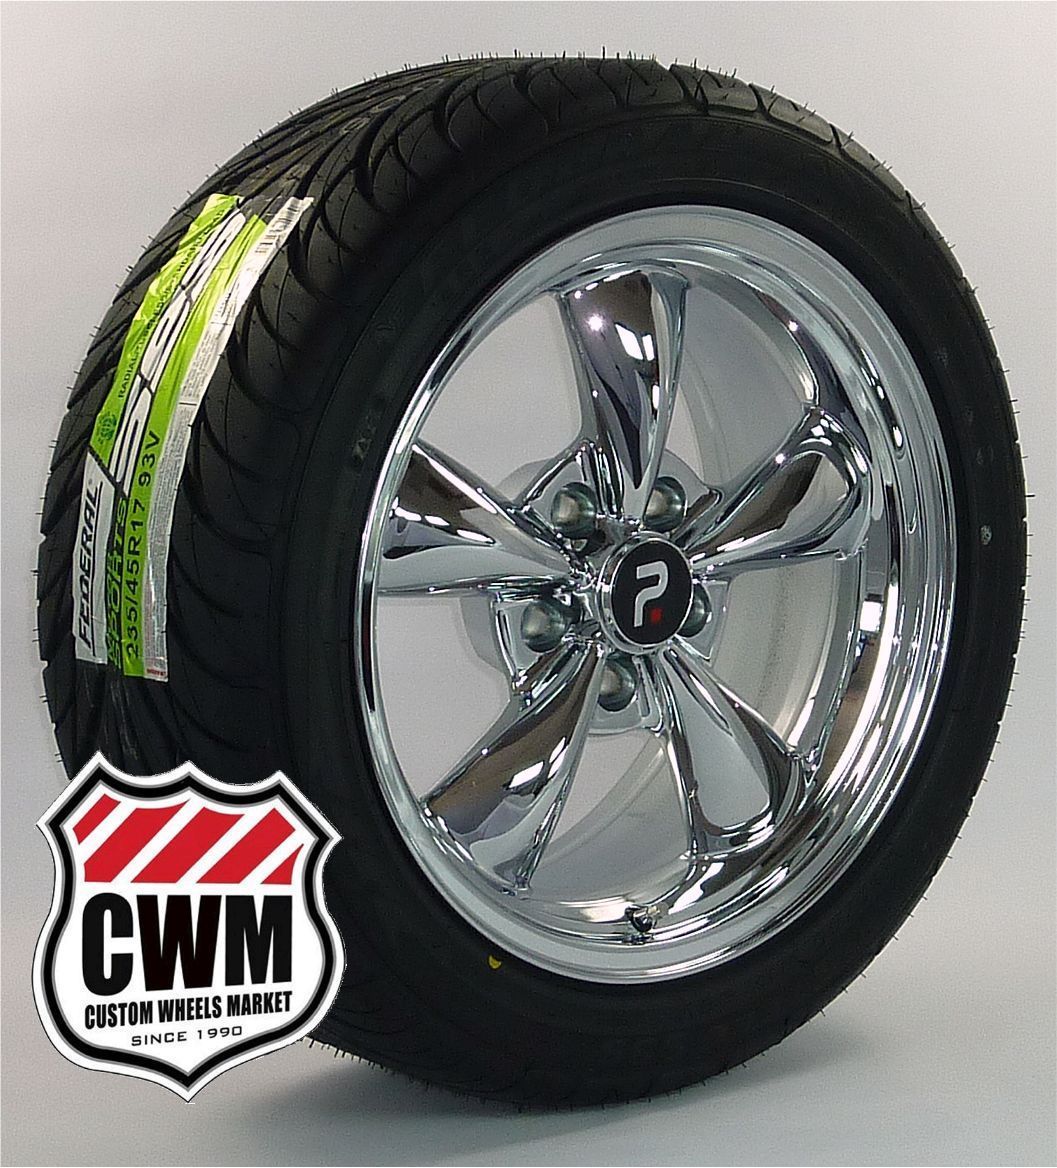 Classic 5 Spoke Chrome Wheels Rims Federal Tires for Chevy Nova 68 79